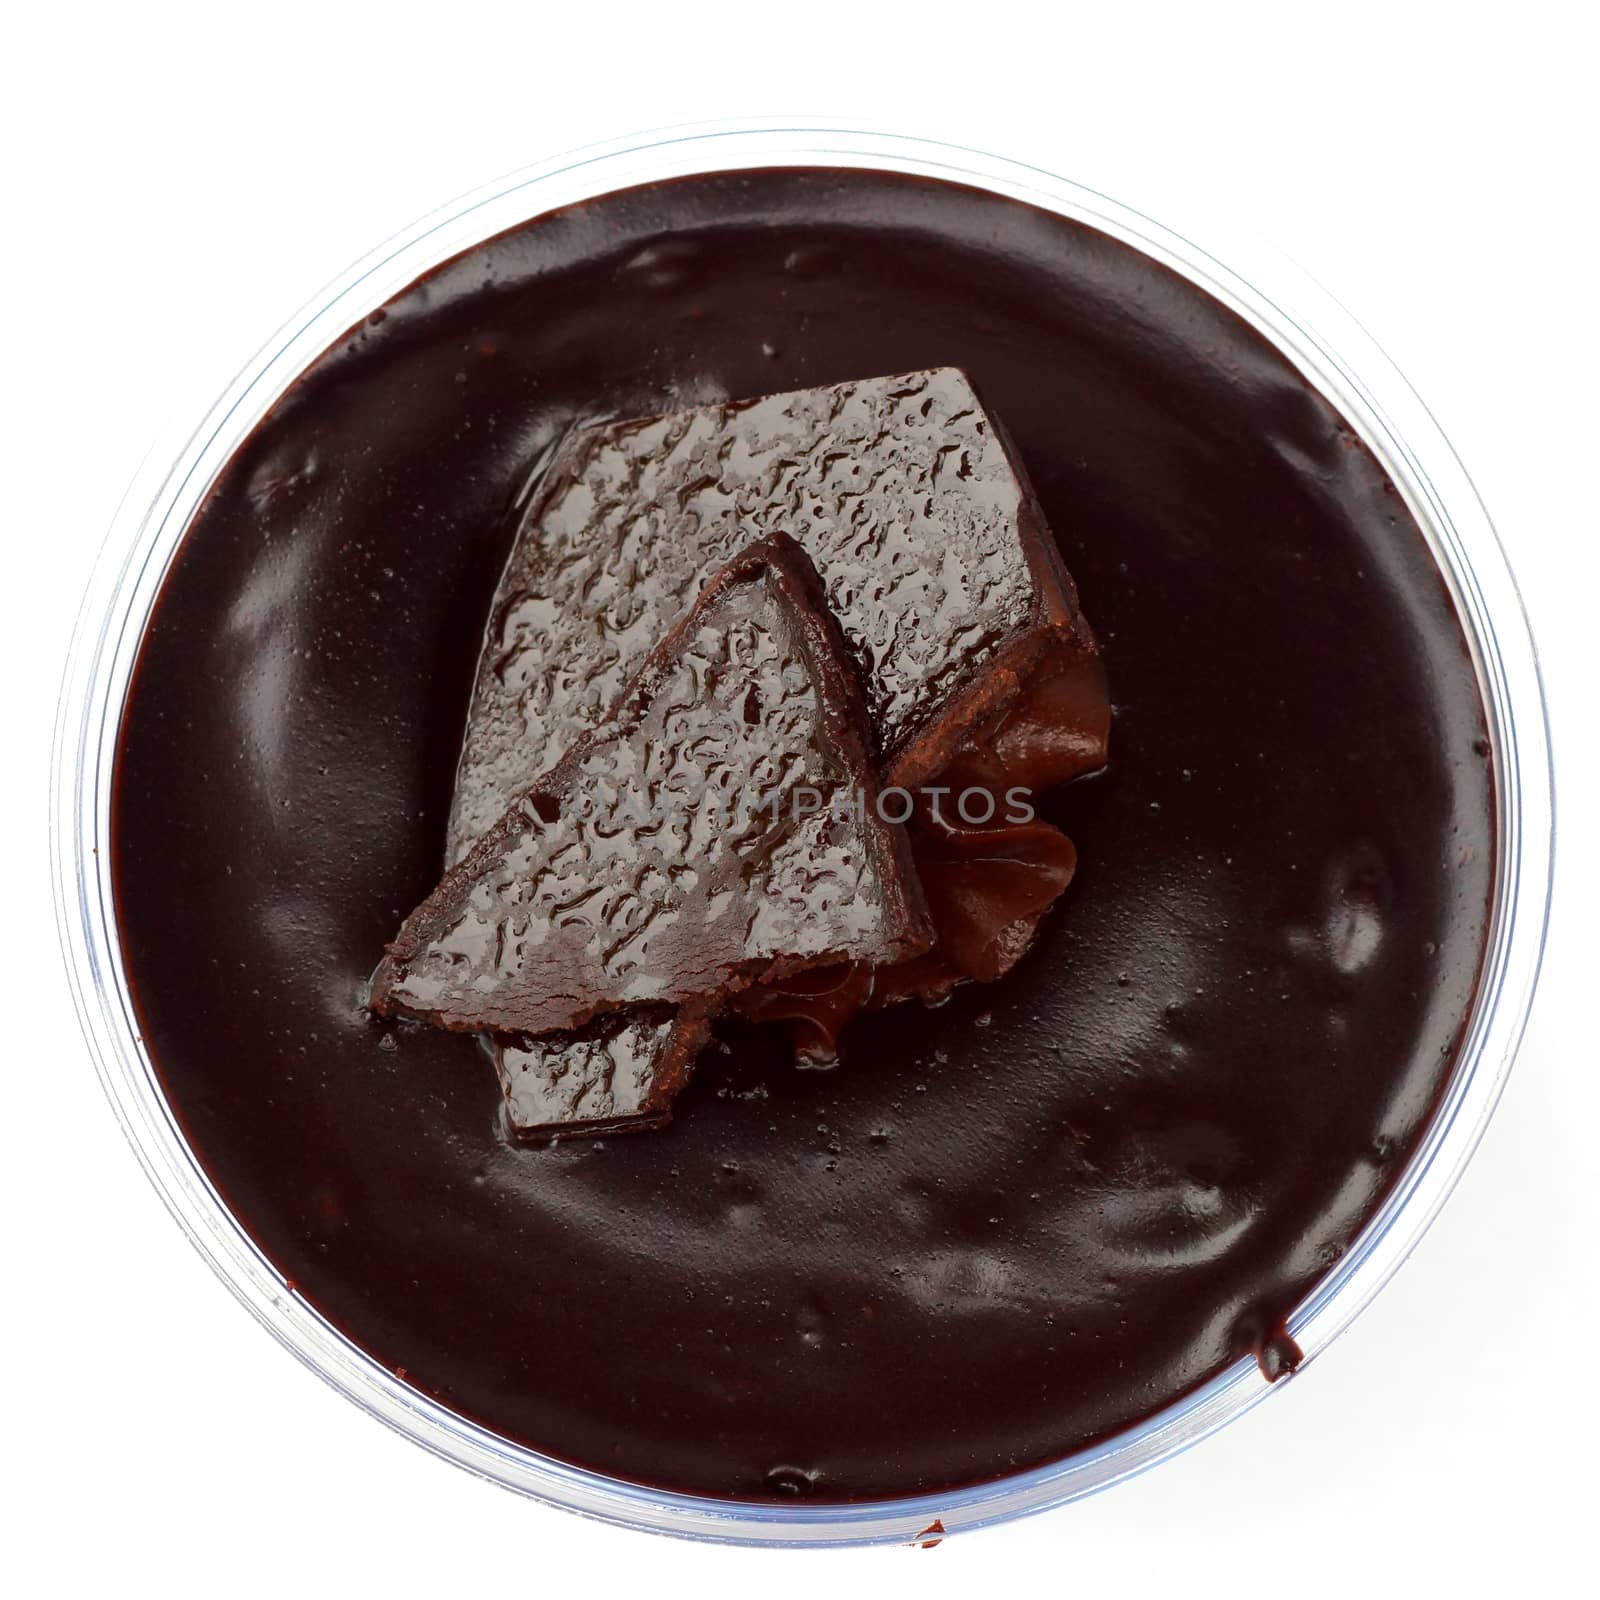 Chocolate sheet cake.